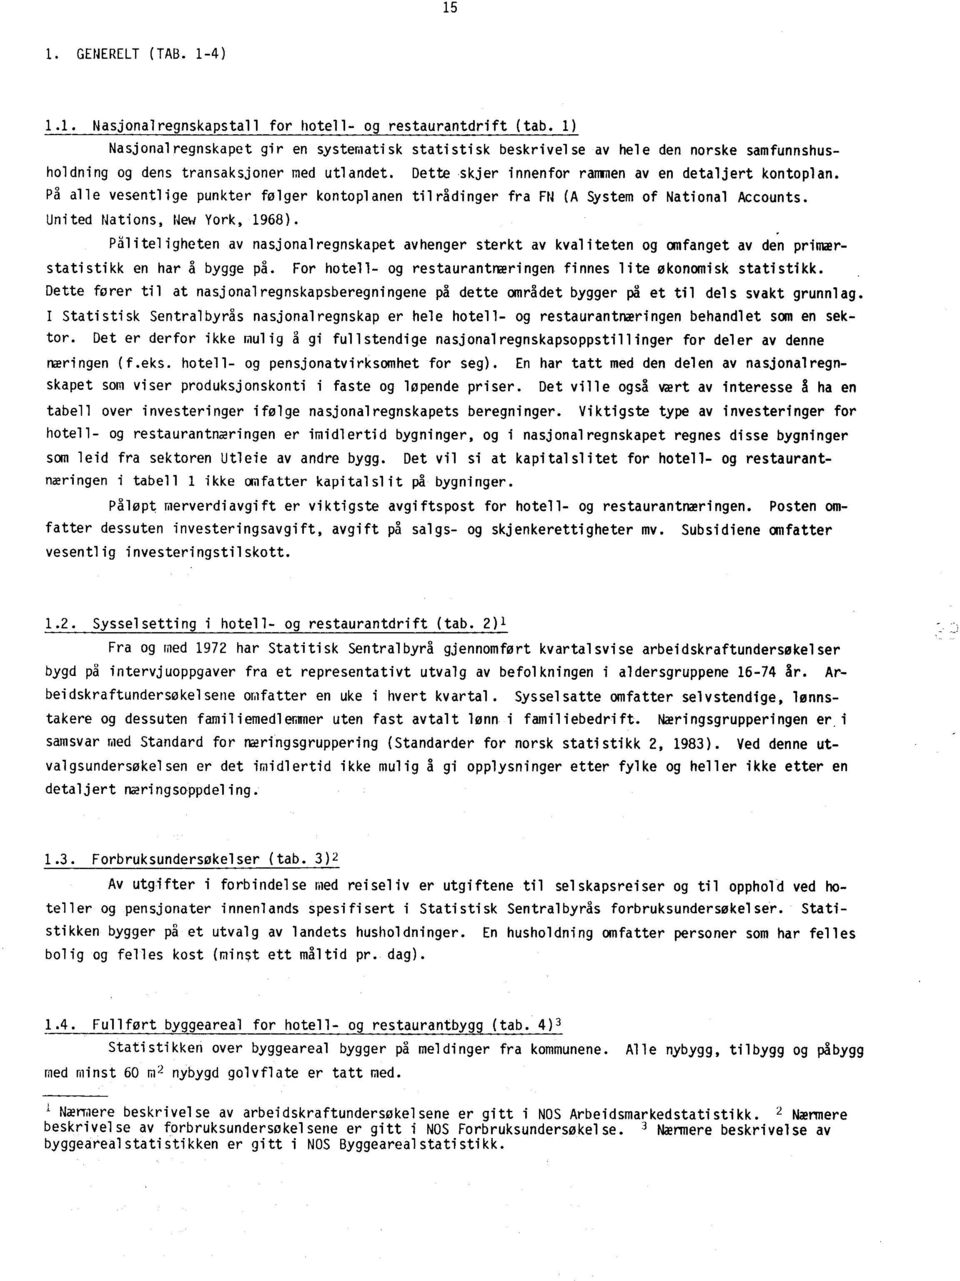 På alle vesentlige punkter følger kontoplanen tilrådinger fra FN (A System of National Accounts. United Nations, New York, 1968).